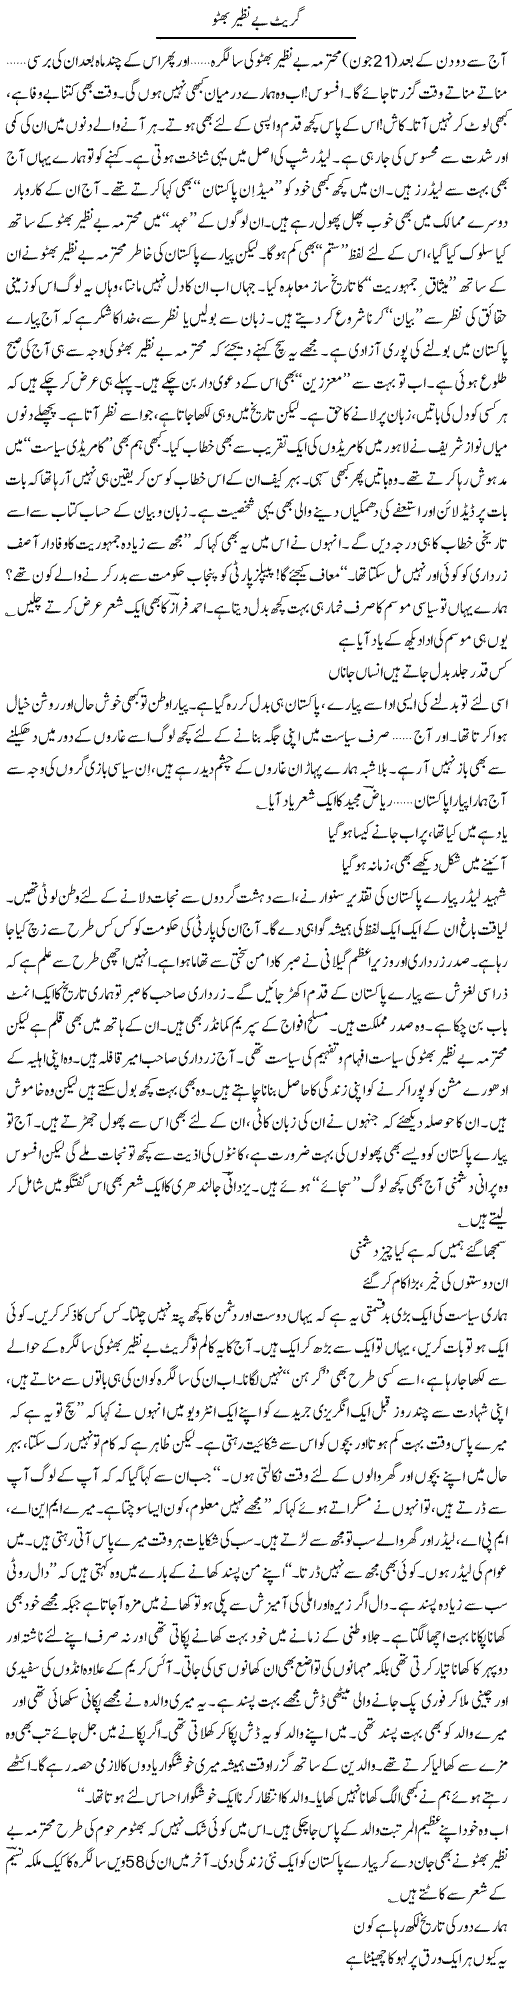 Benazir Bhutto Express Column Ijaz Abdul Hafeez 19 June 2011